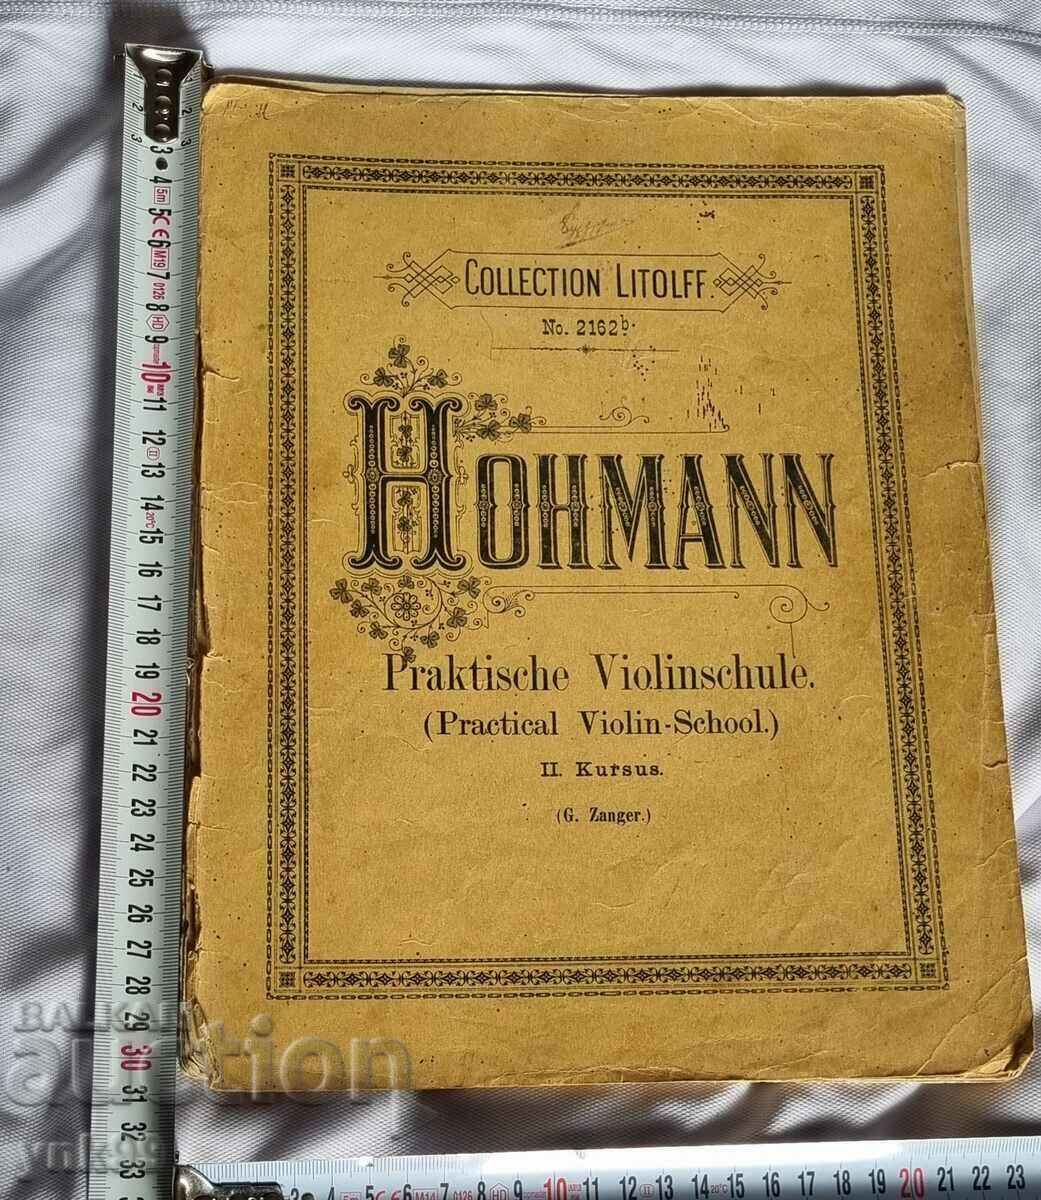 Sheet music HOHMANN Praktische Violinschule, sheet music, violin